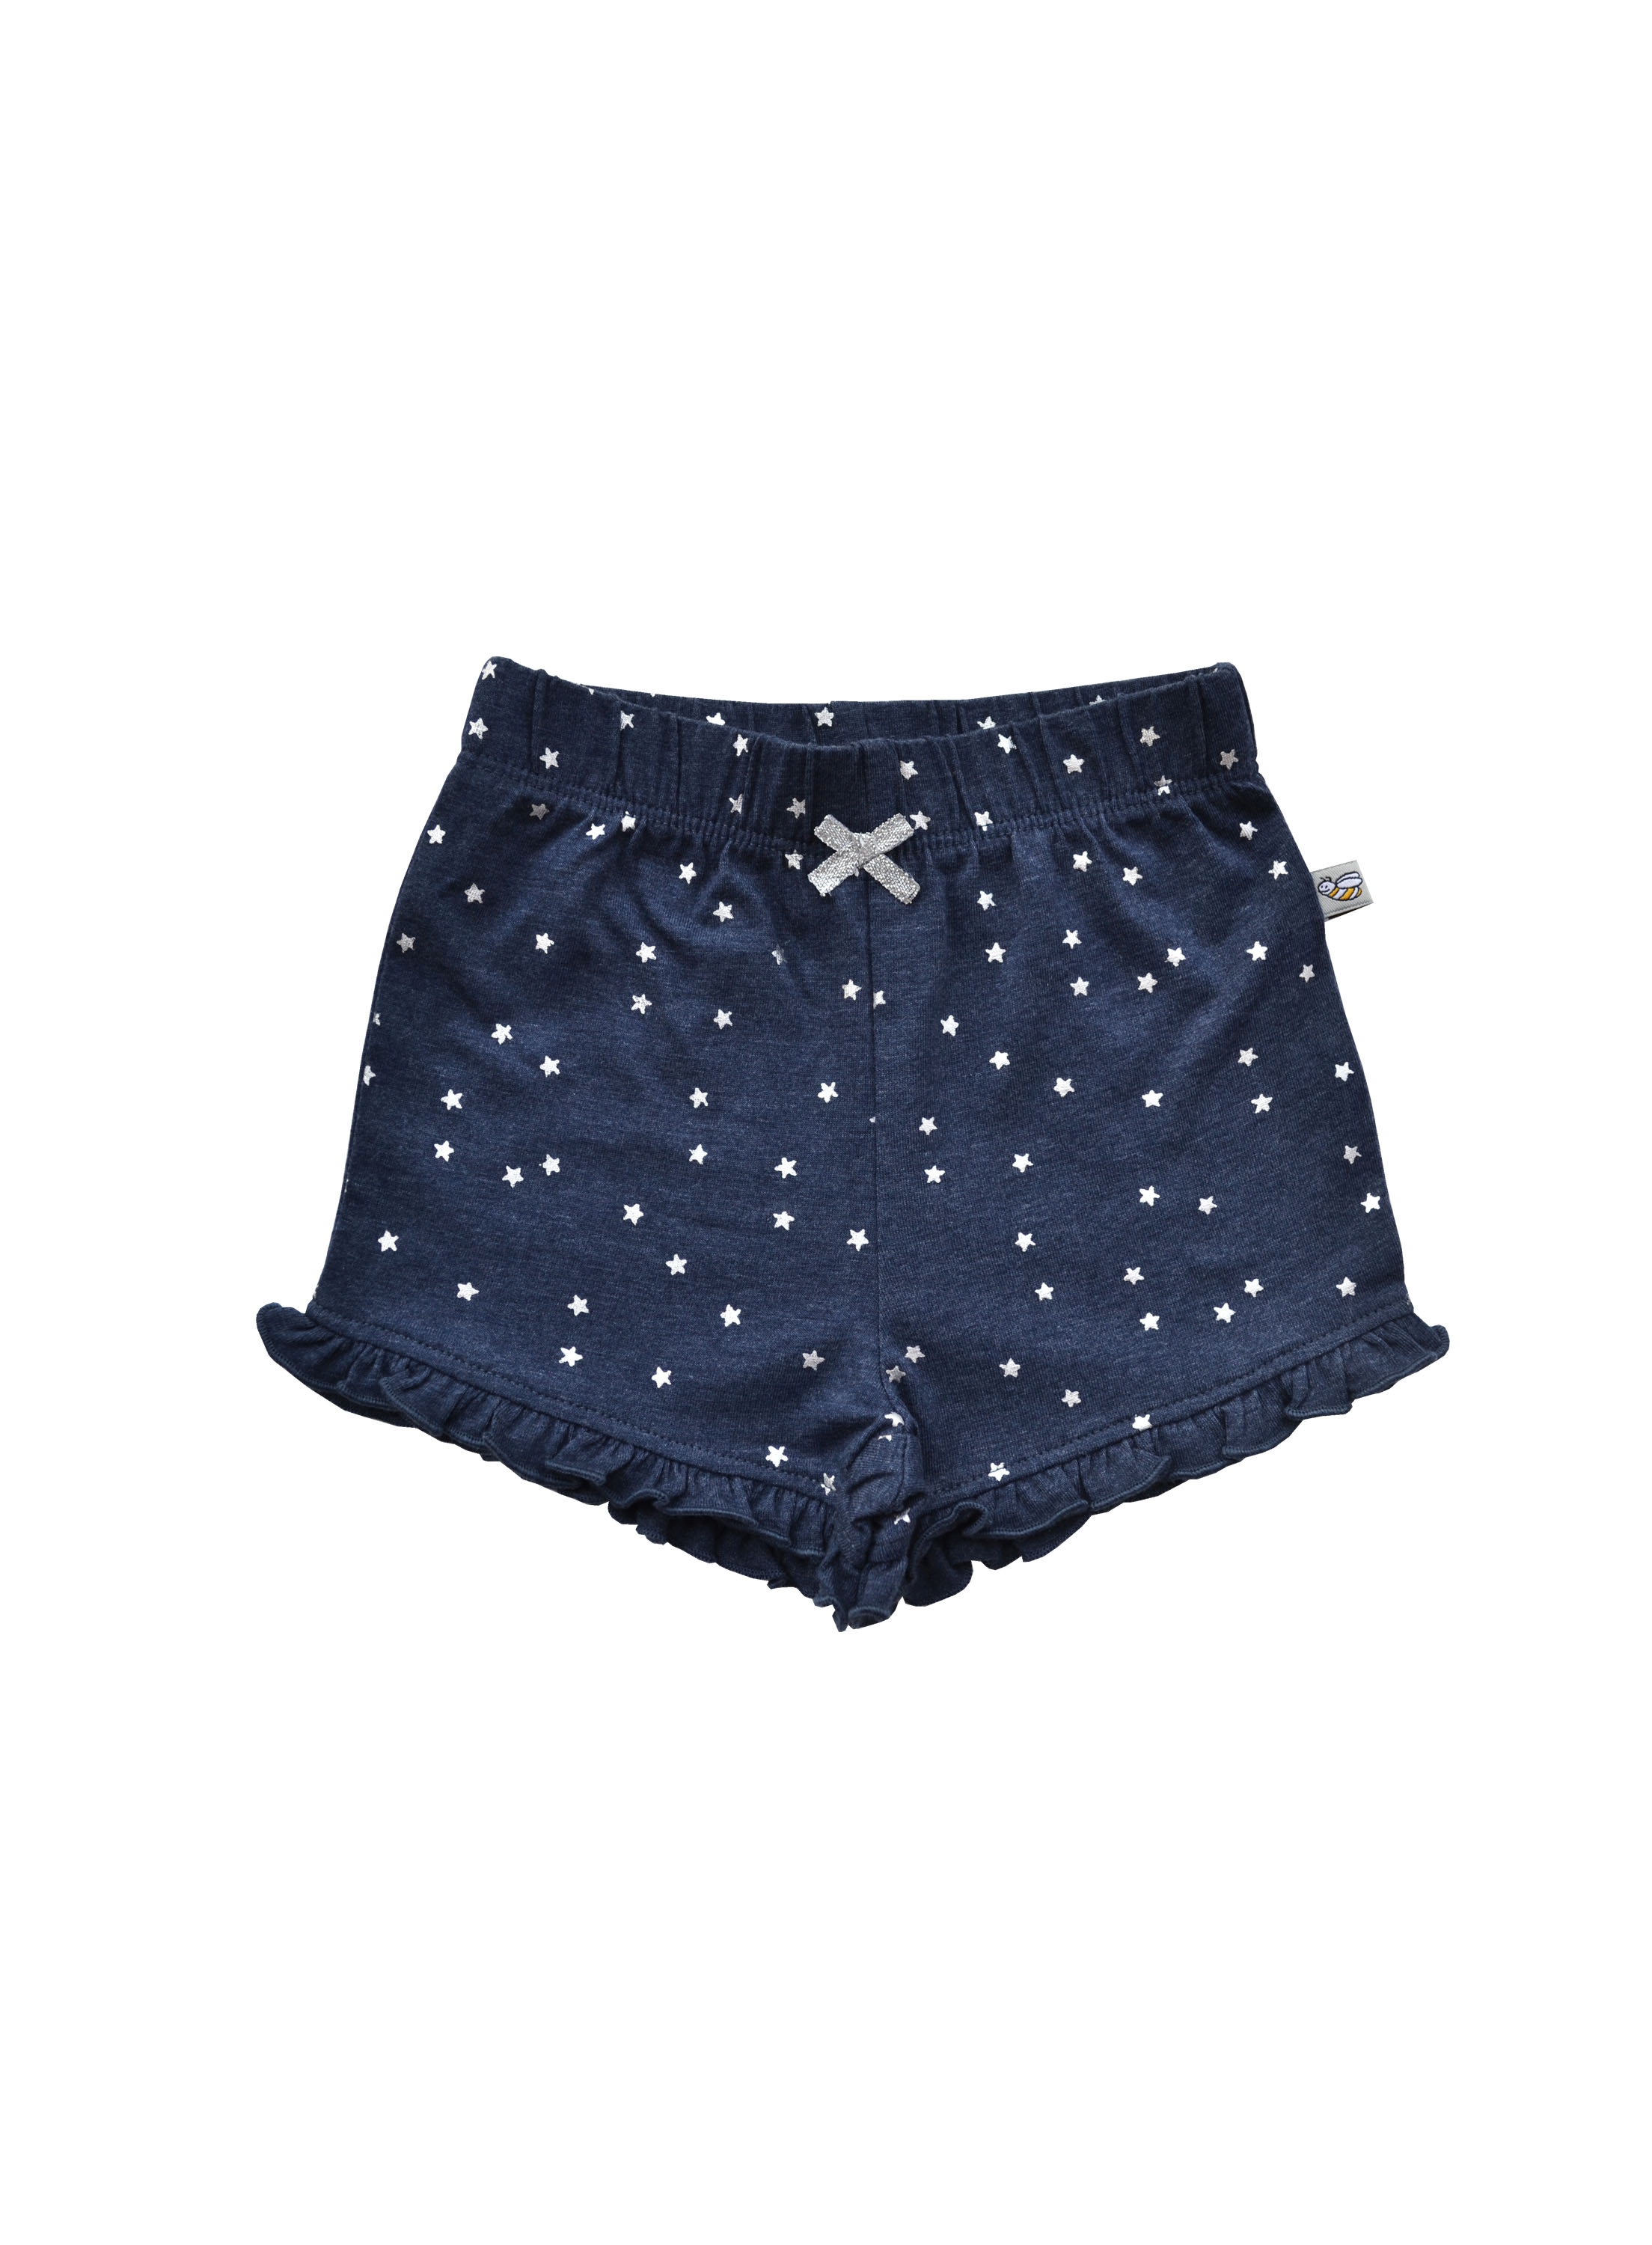 Allover Star Print On Denim Blue Girls Shorts (60% Cotton 35% Polyester 5% Elasthan)